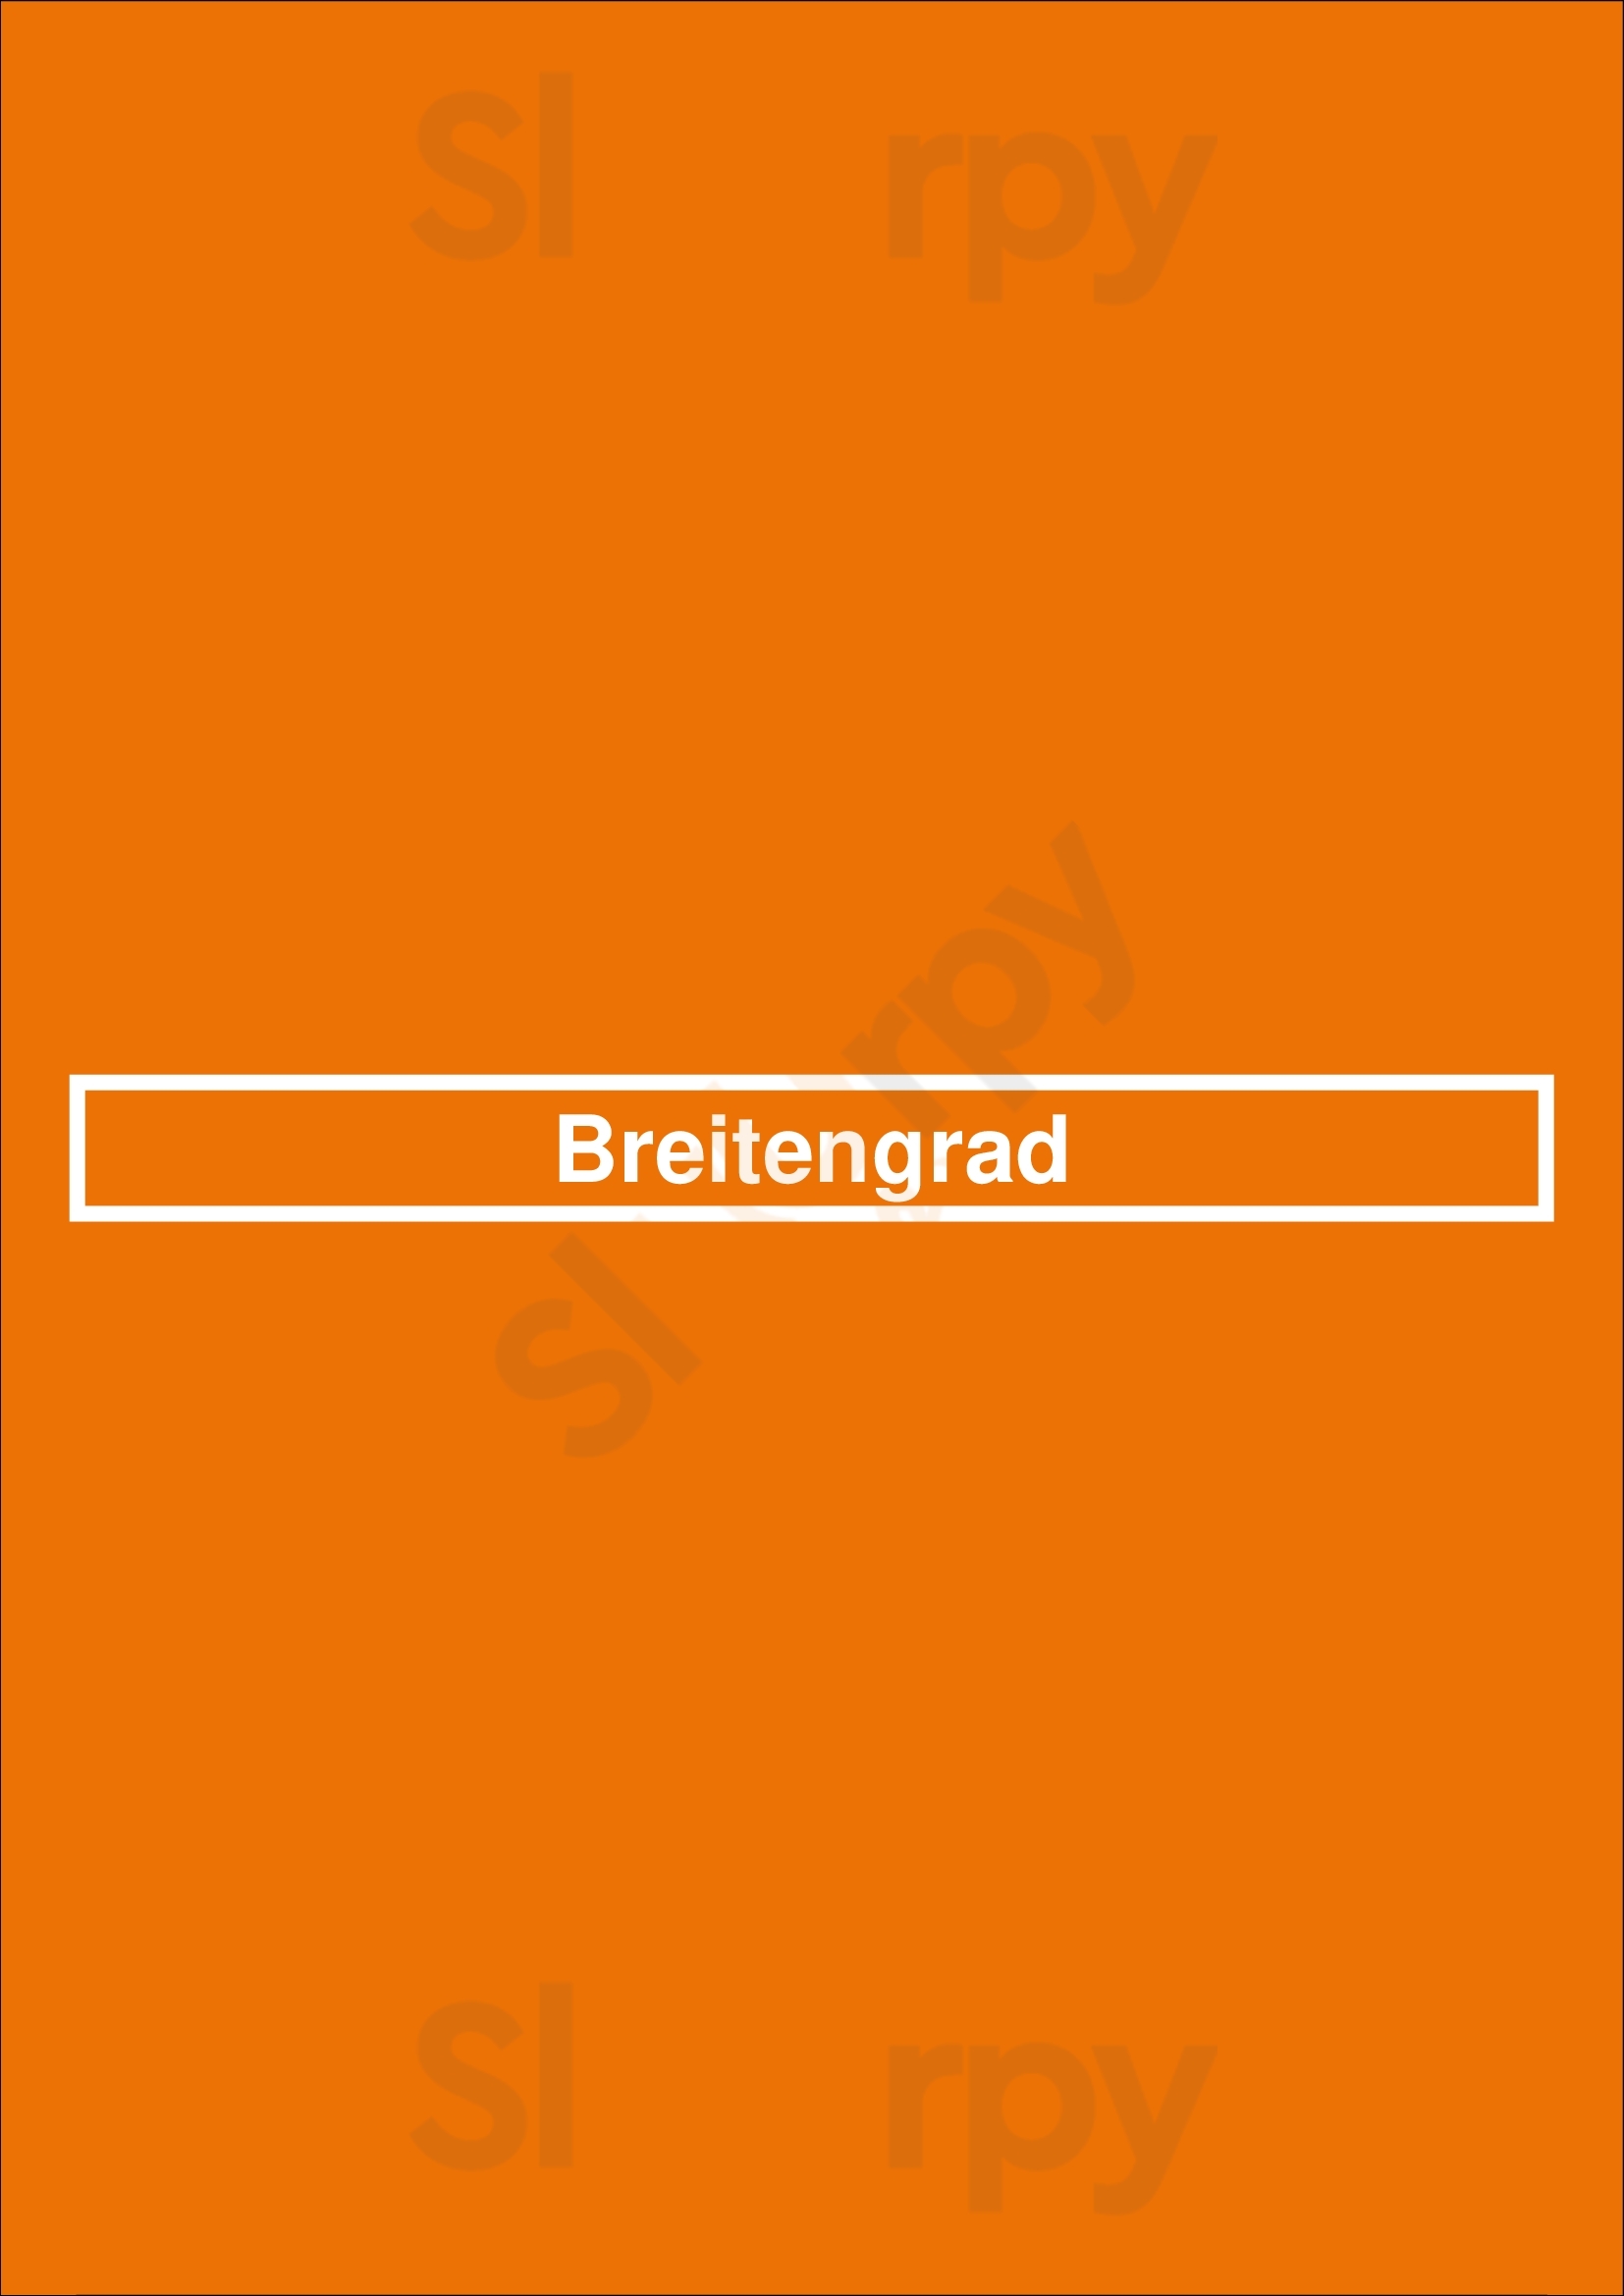 Breitengrad Hamburg Menu - 1